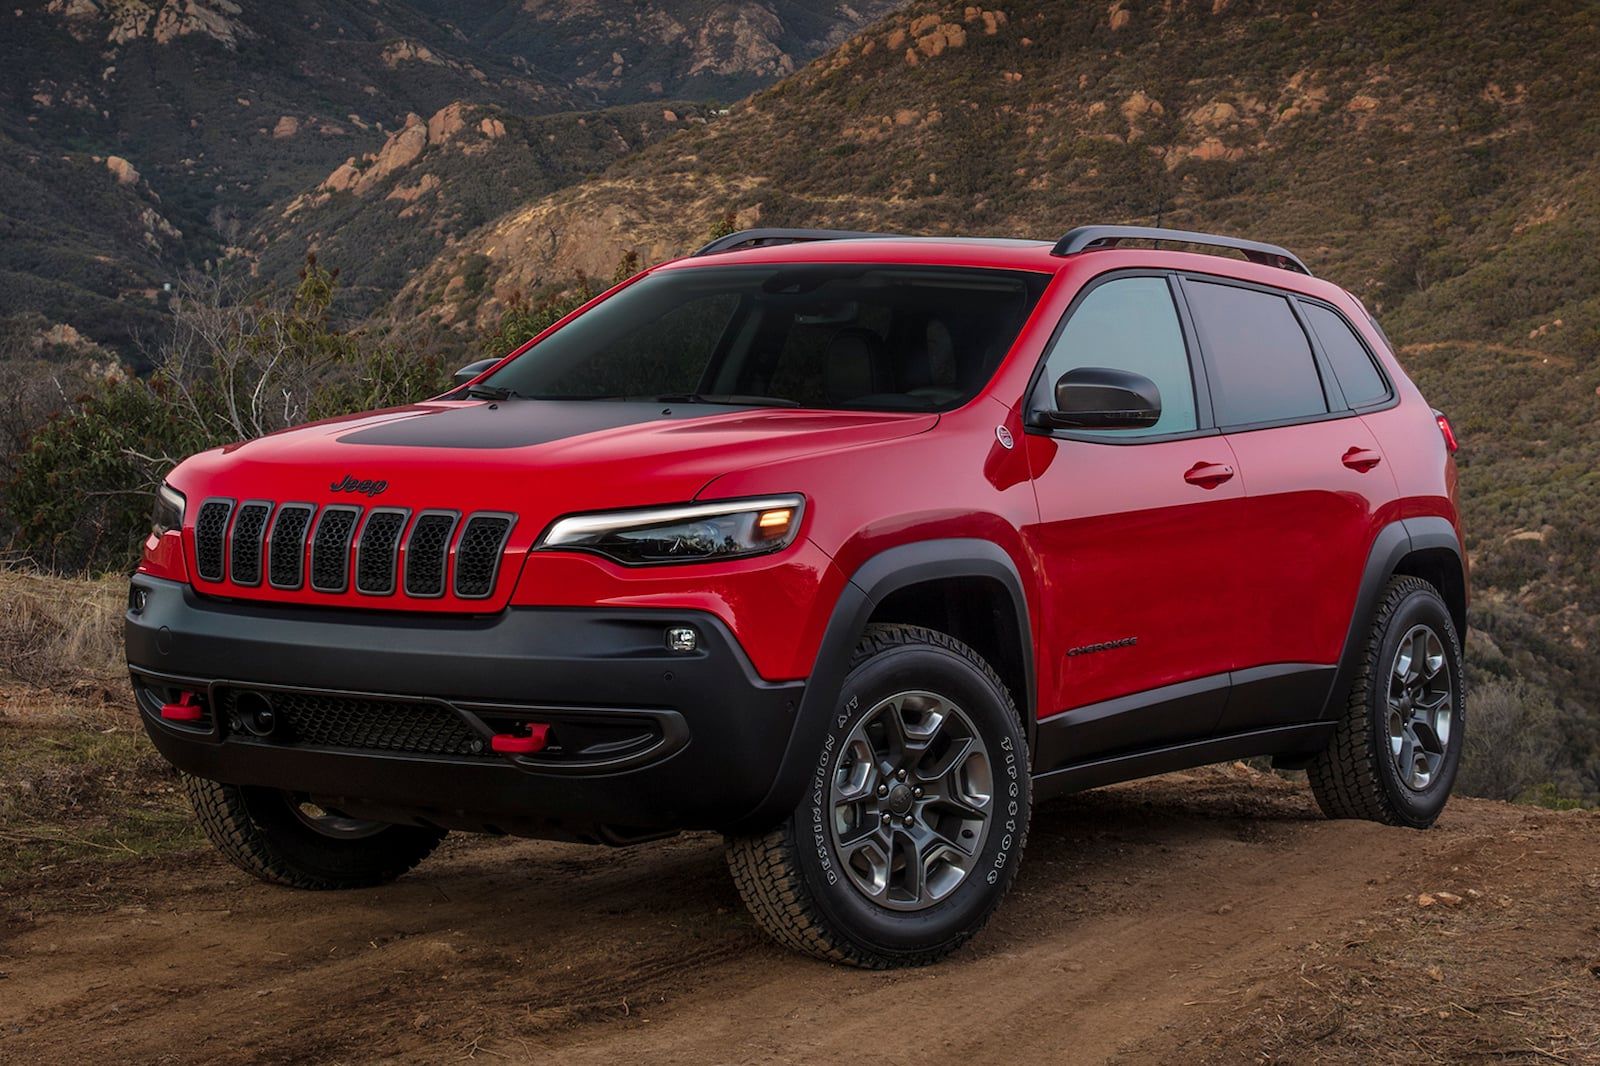 Ассортимент Jeep Cherokee 2023 года будет значительно сокращен, а двигатель V6 будет исключен (foto: jeep)